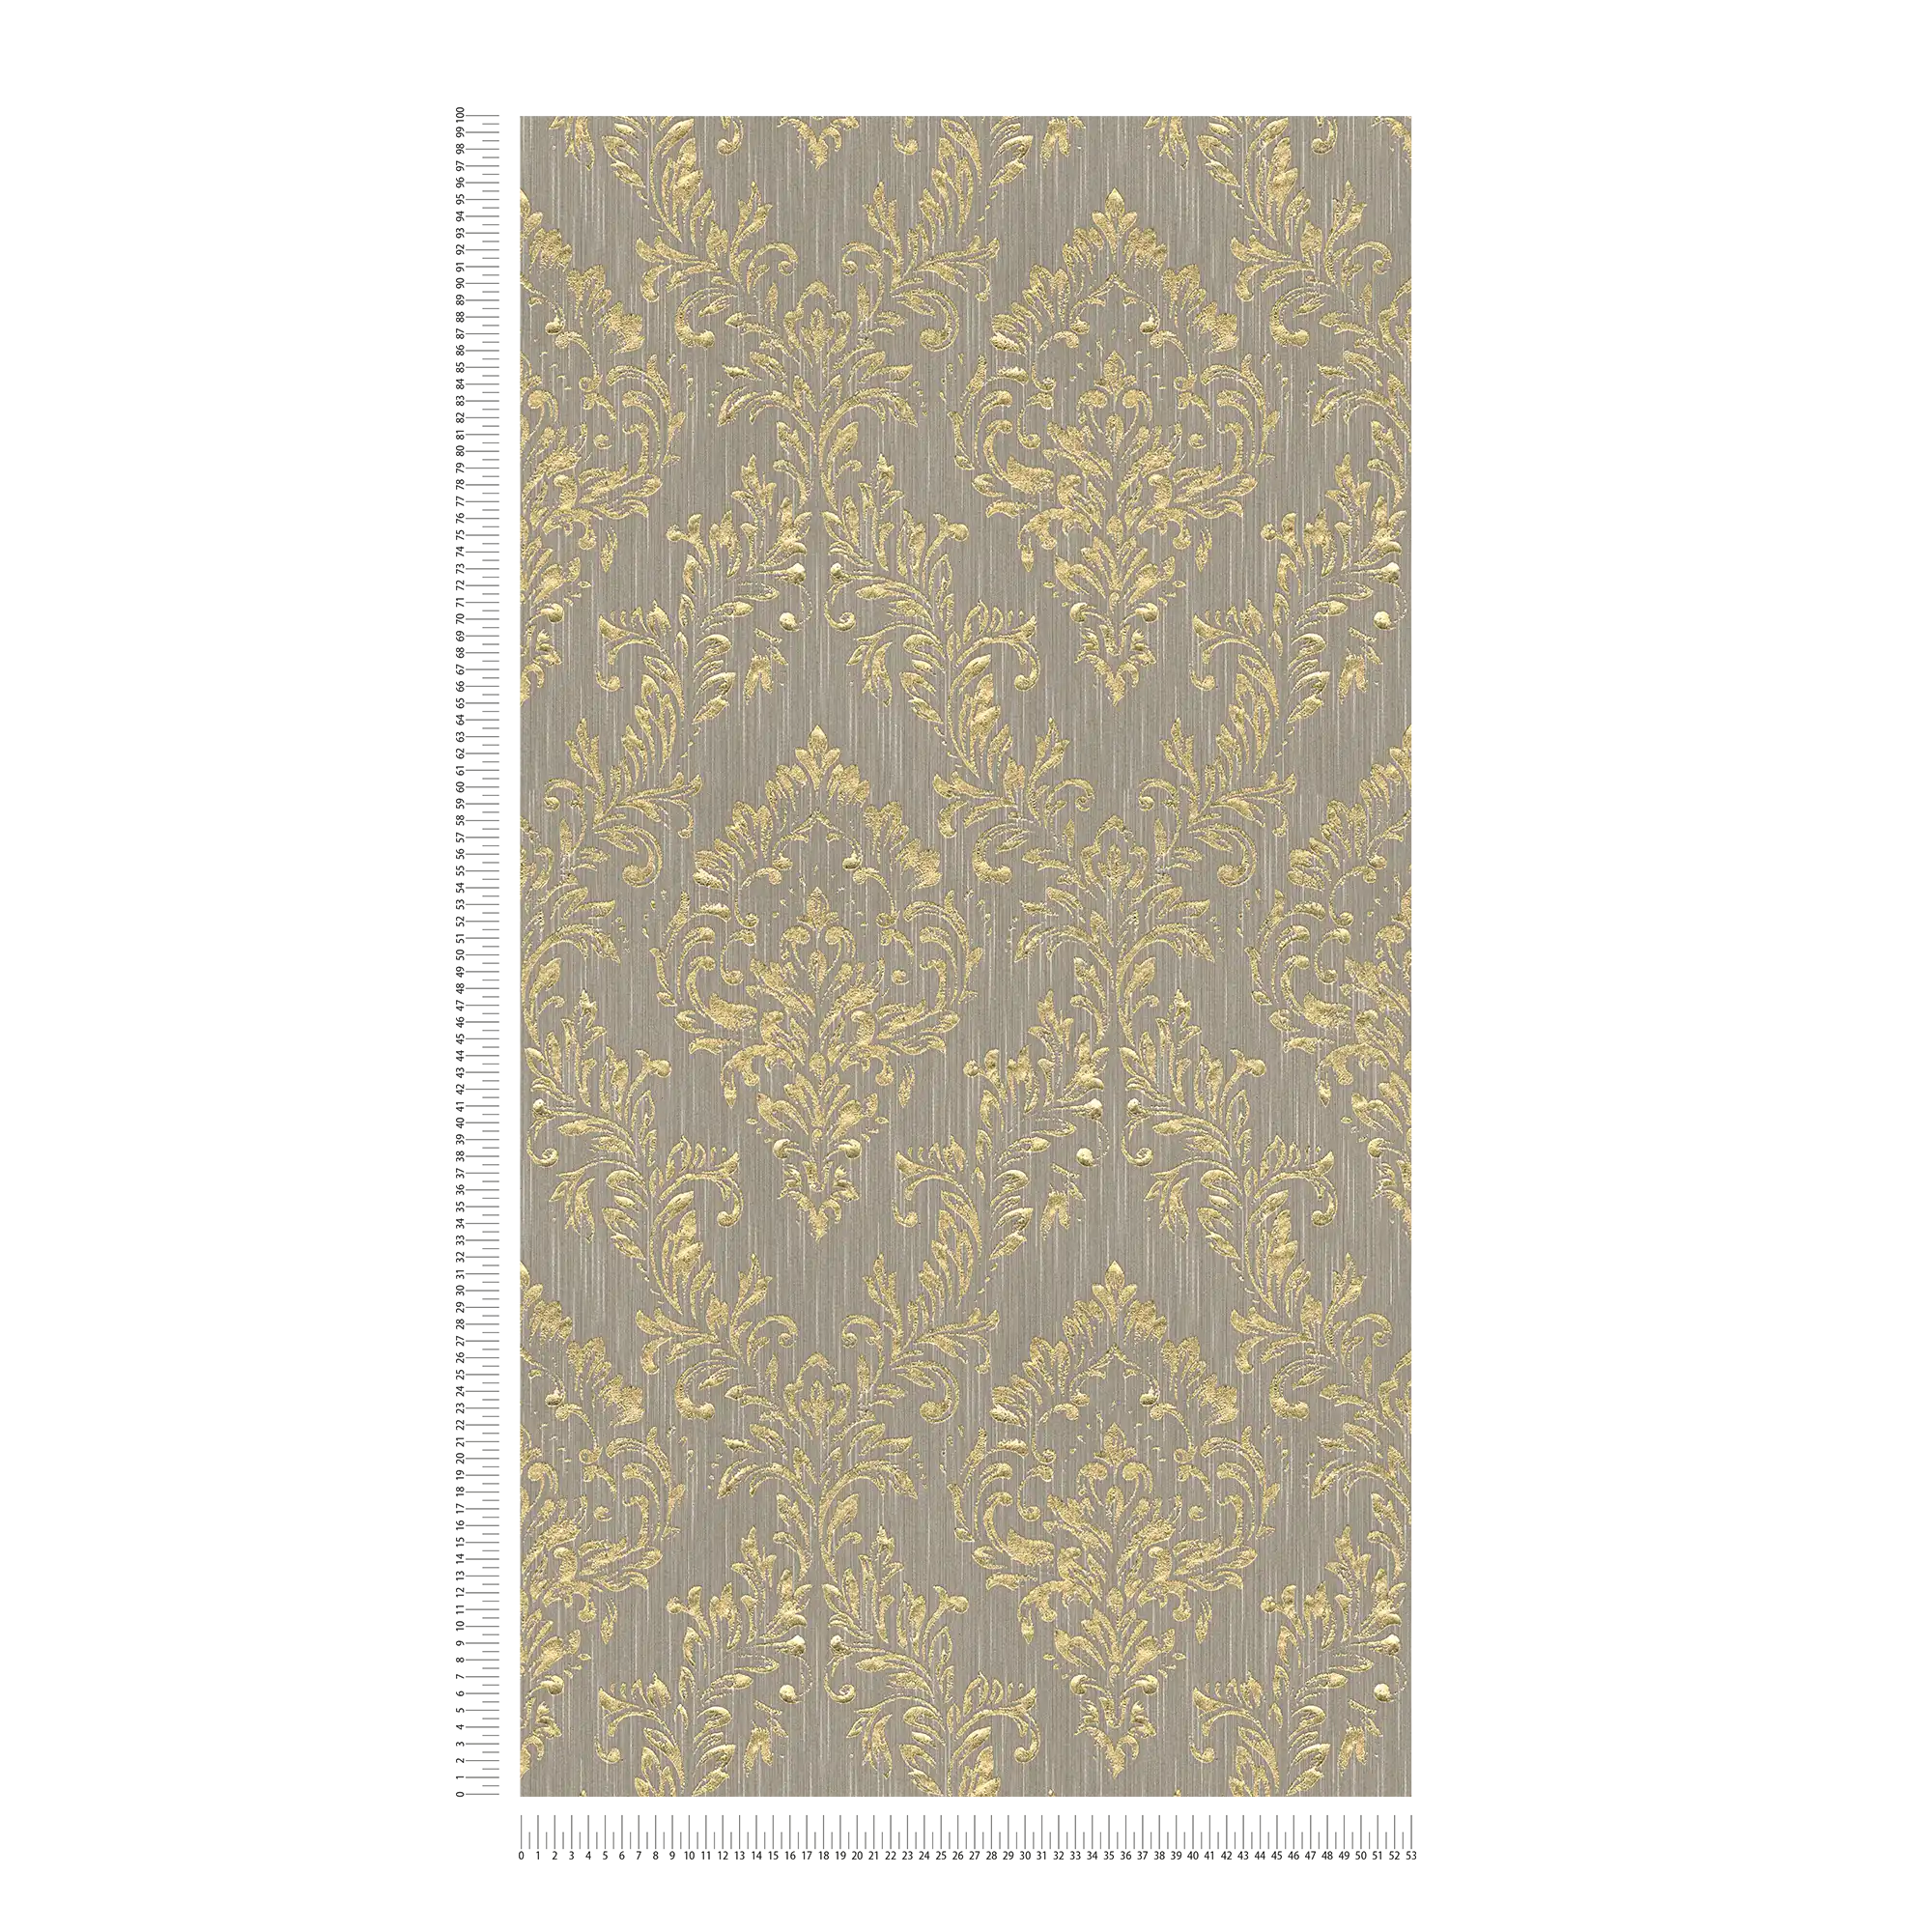             Ornament-Tapete floral mit goldenem Glitzer-Effekt – Gold, Beige
        